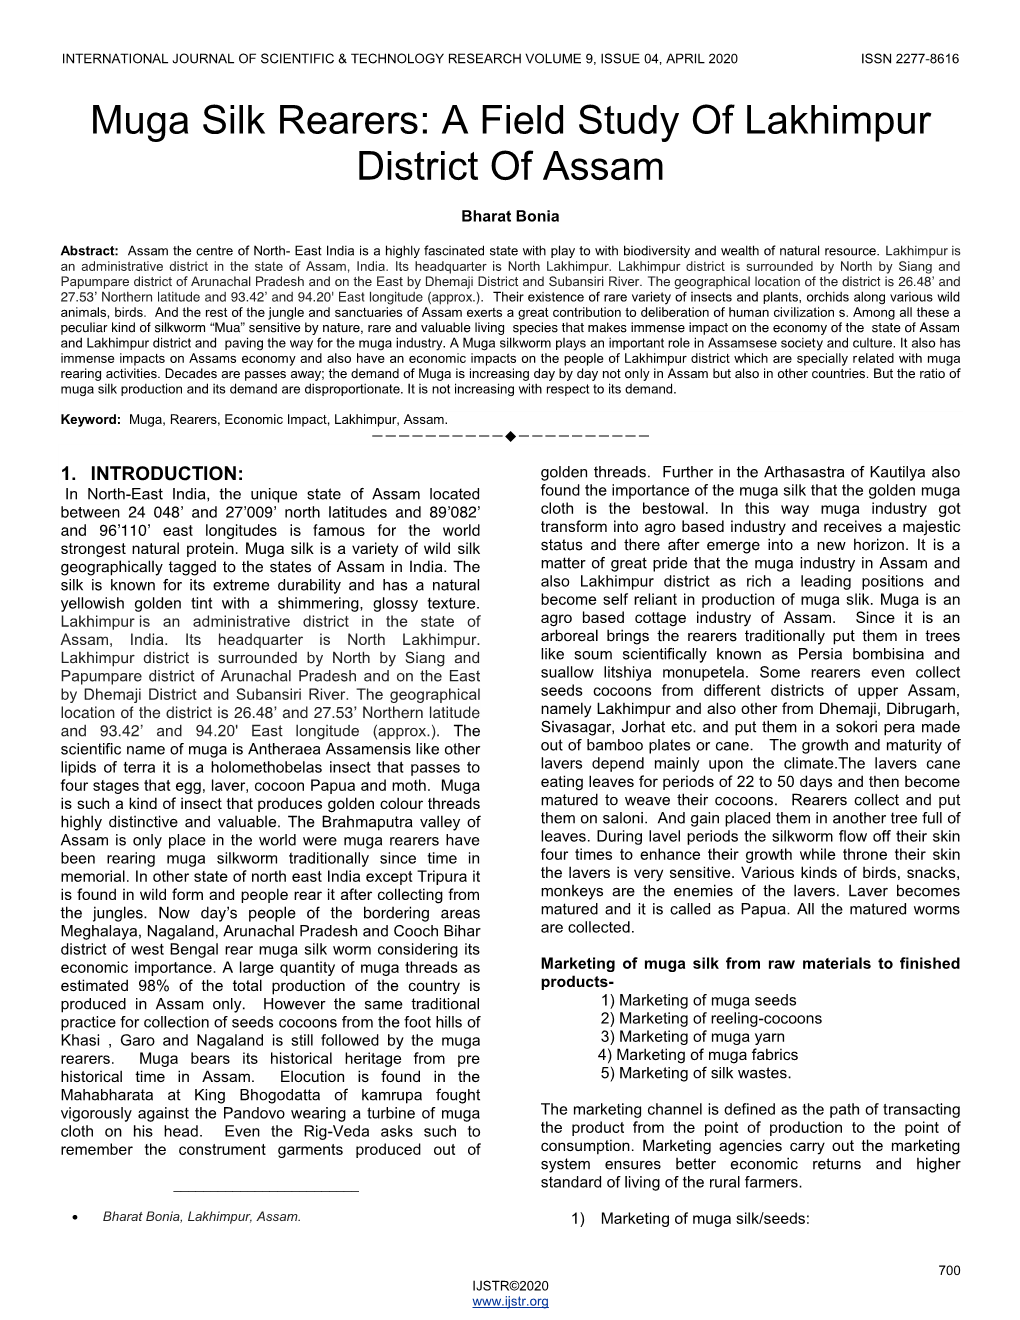 Muga Silk Rearers: a Field Study of Lakhimpur District of Assam